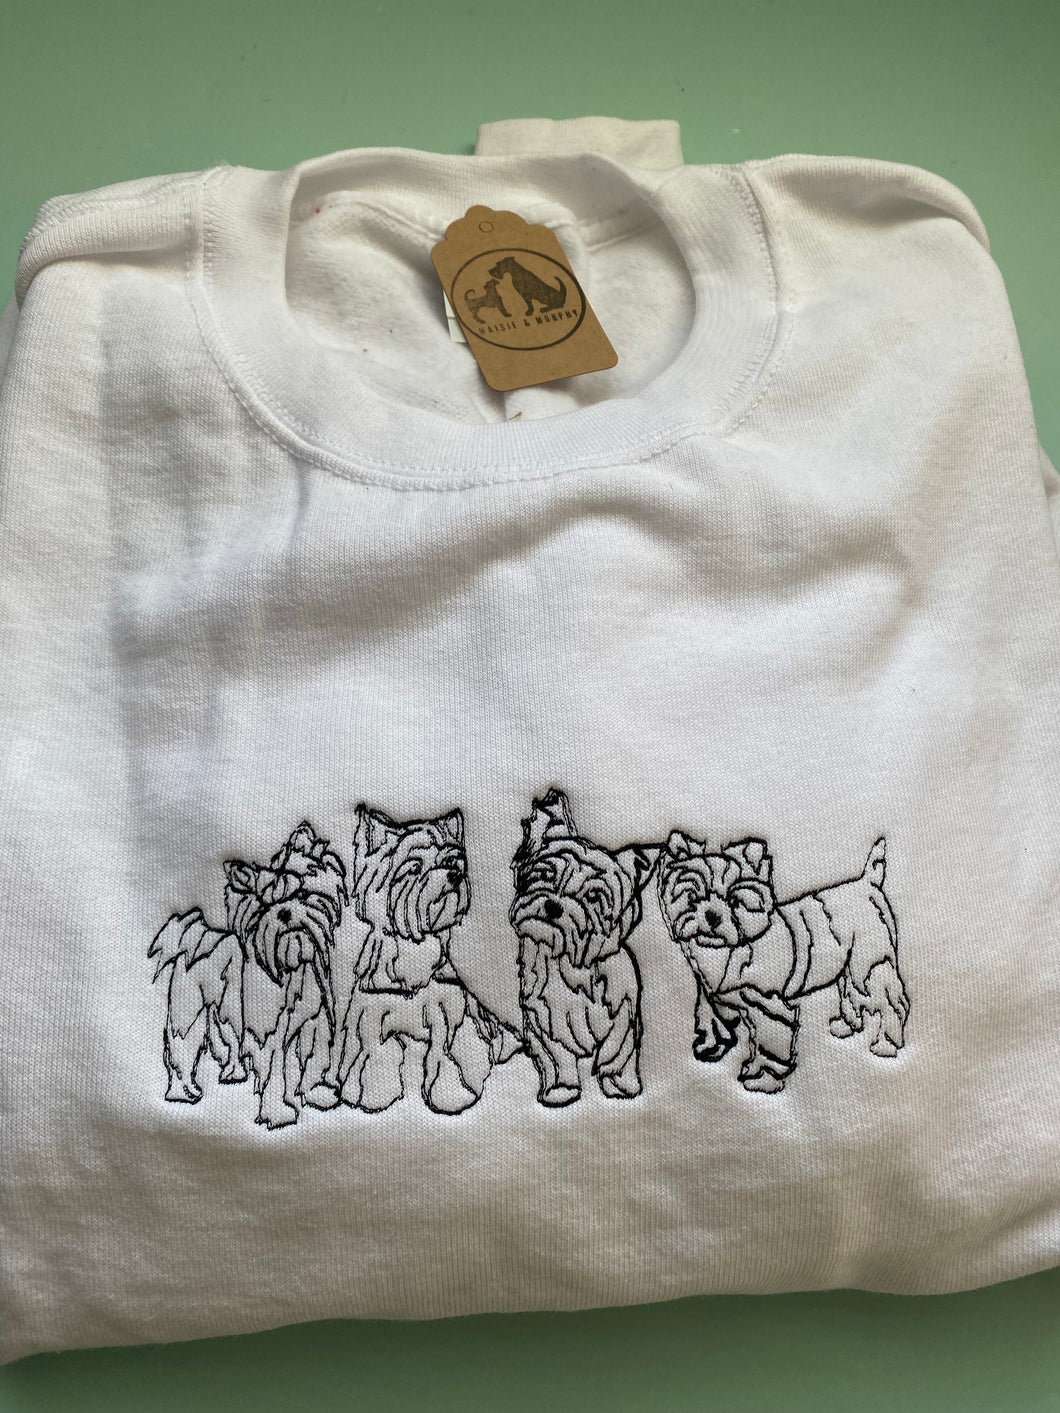 Imperfect Yorkshire terrier doodle Sweatshirt - Size L / White